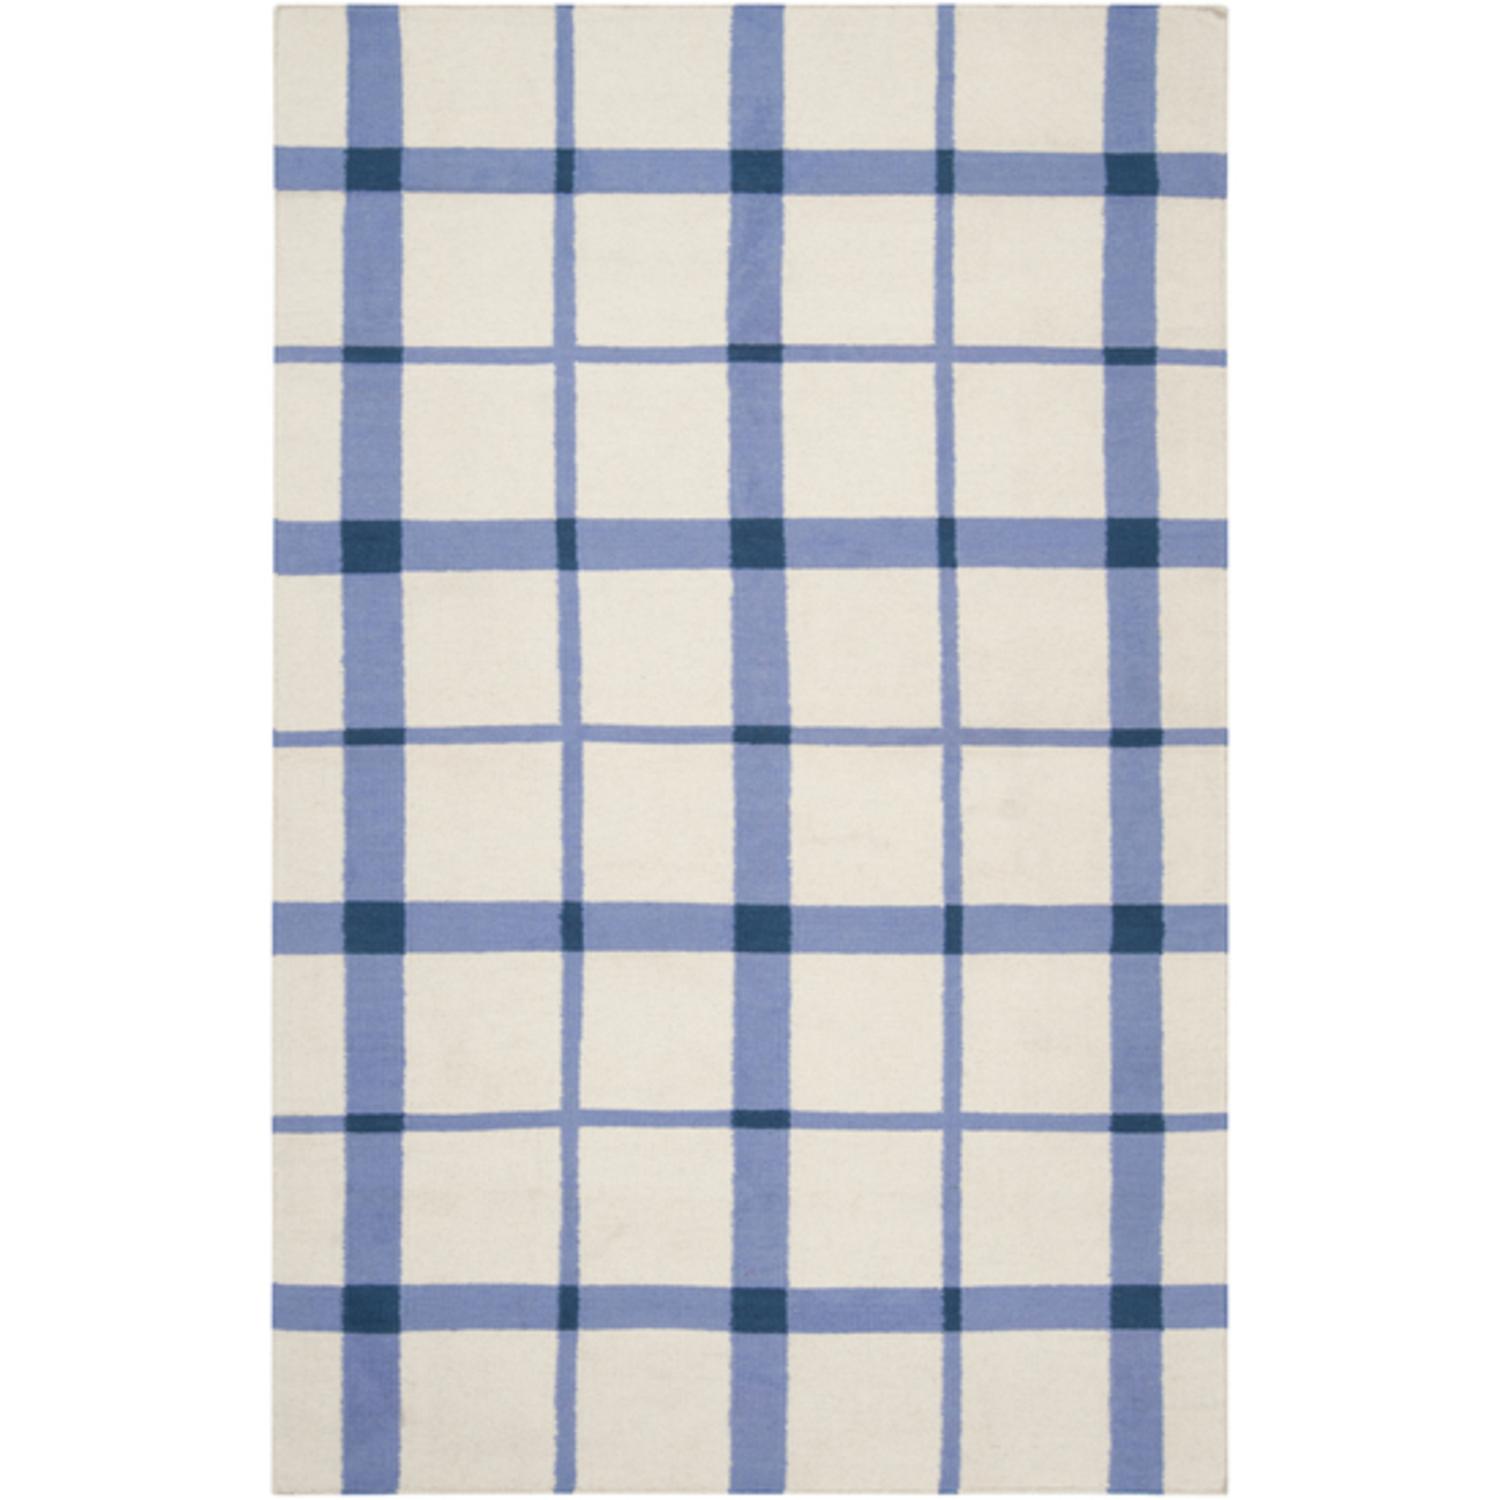 CC Home Furnishings 3.5' x 5.5' Skinny Plaid Chic Periwinkle Blue Wool Area Throw Rug